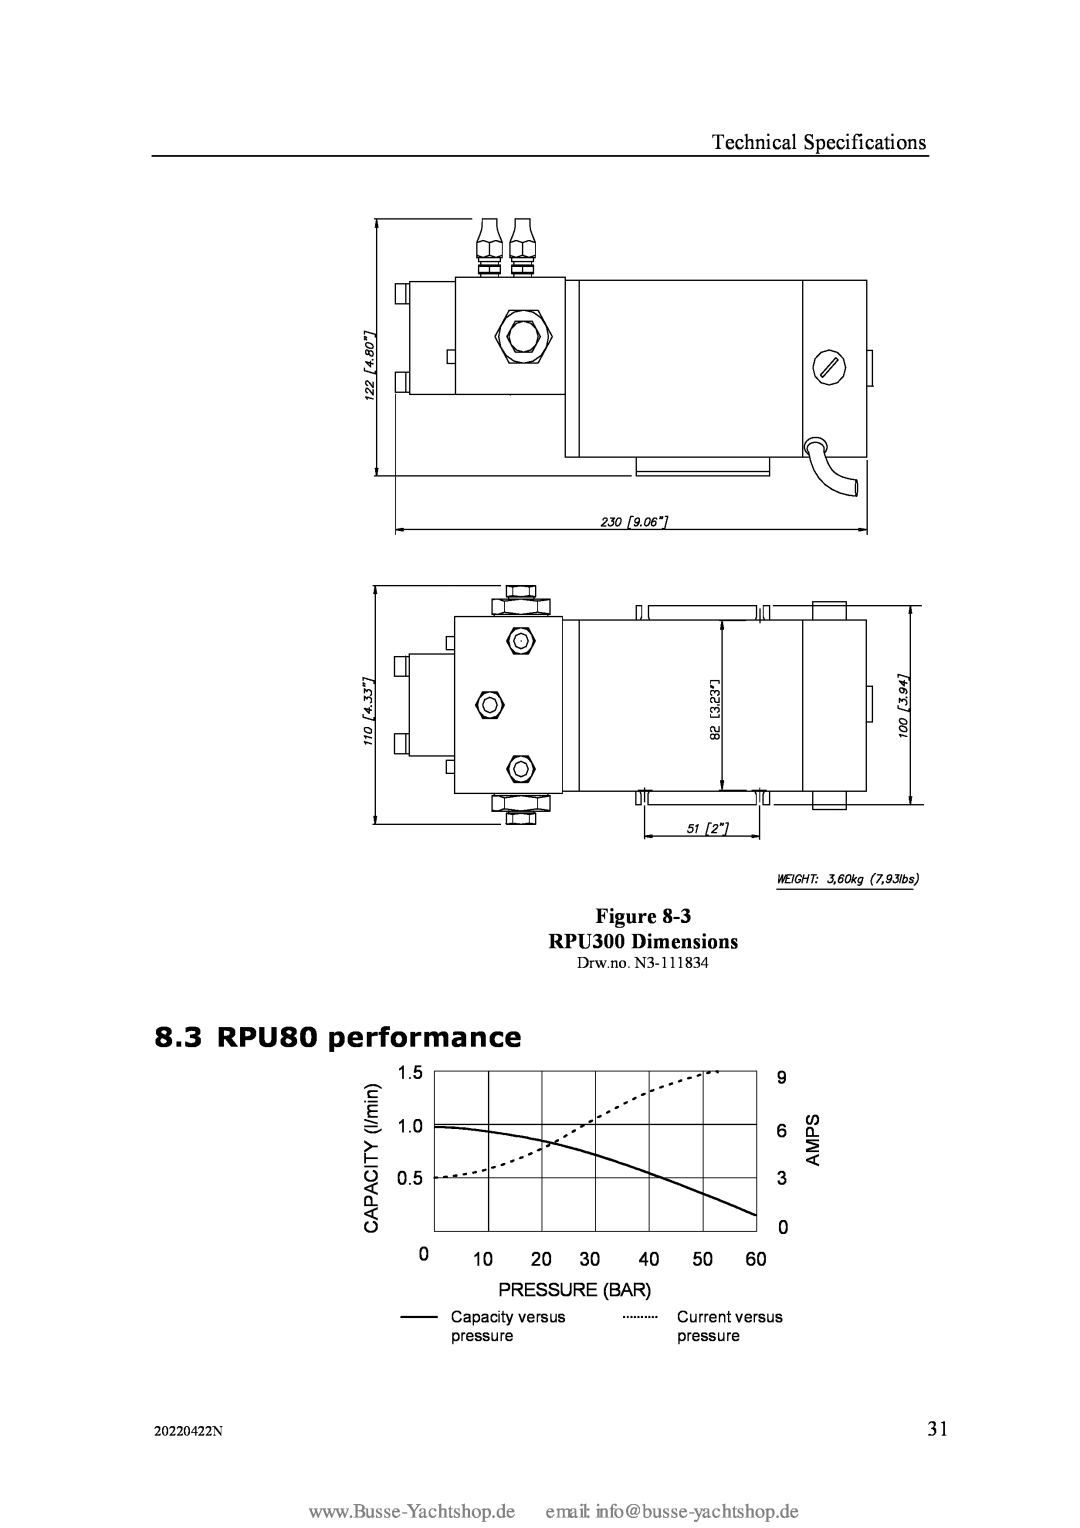 Simran instruction manual 8.3 RPU80 performance, Figure RPU300 Dimensions 